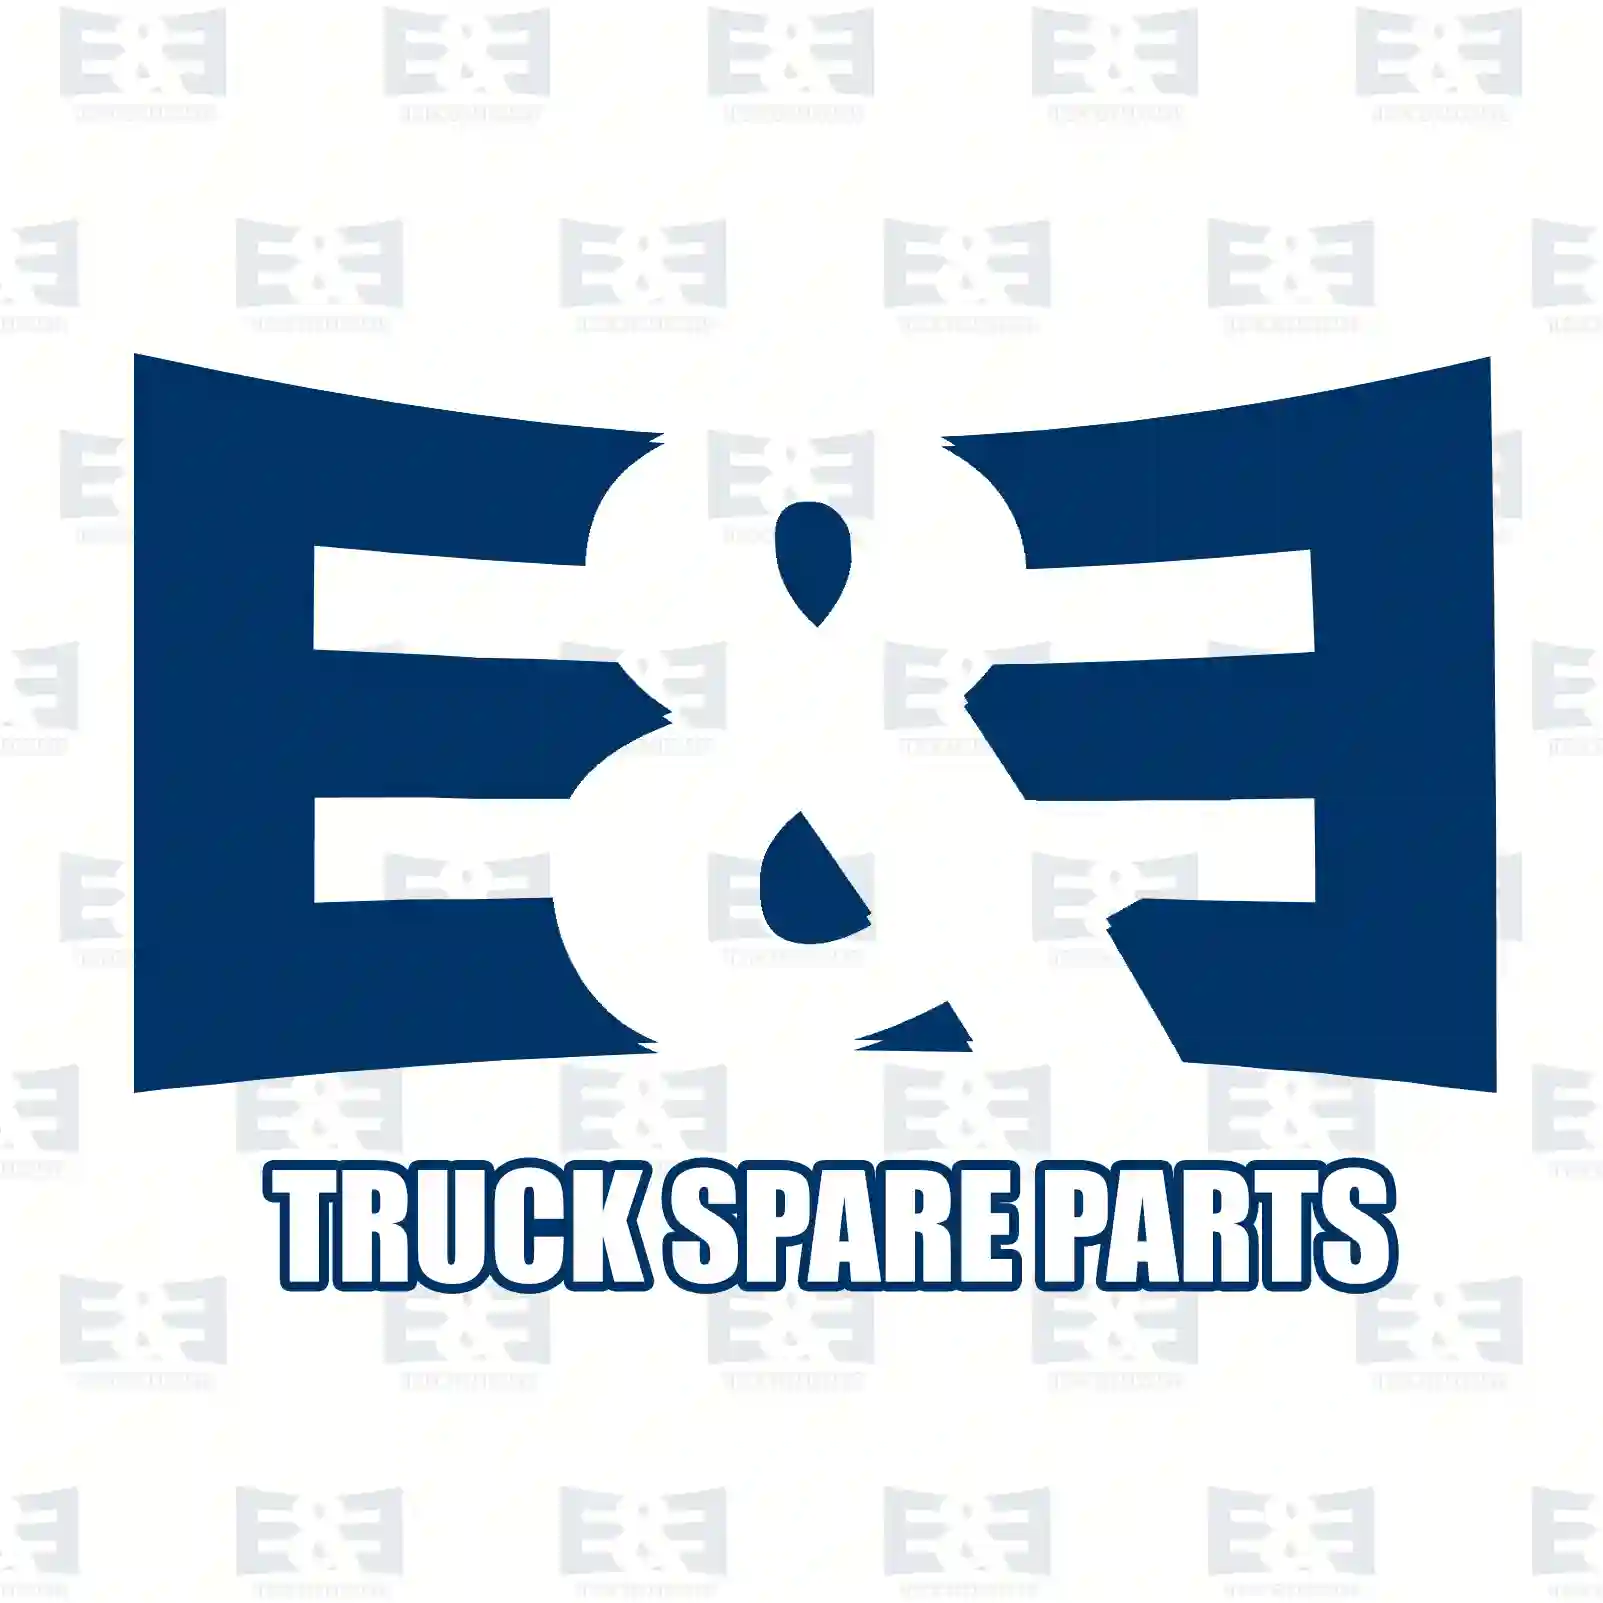 Clutch disc, 2E2289171, 31250E0A80, 81303010484, 81303010553, 81303010571, 0182506103, 0182506203, 0202505303, 0202505503, 0202505603, 0232509703, 0252507803 ||  2E2289171 E&E Truck Spare Parts | Truck Spare Parts, Auotomotive Spare Parts Clutch disc, 2E2289171, 31250E0A80, 81303010484, 81303010553, 81303010571, 0182506103, 0182506203, 0202505303, 0202505503, 0202505603, 0232509703, 0252507803 ||  2E2289171 E&E Truck Spare Parts | Truck Spare Parts, Auotomotive Spare Parts